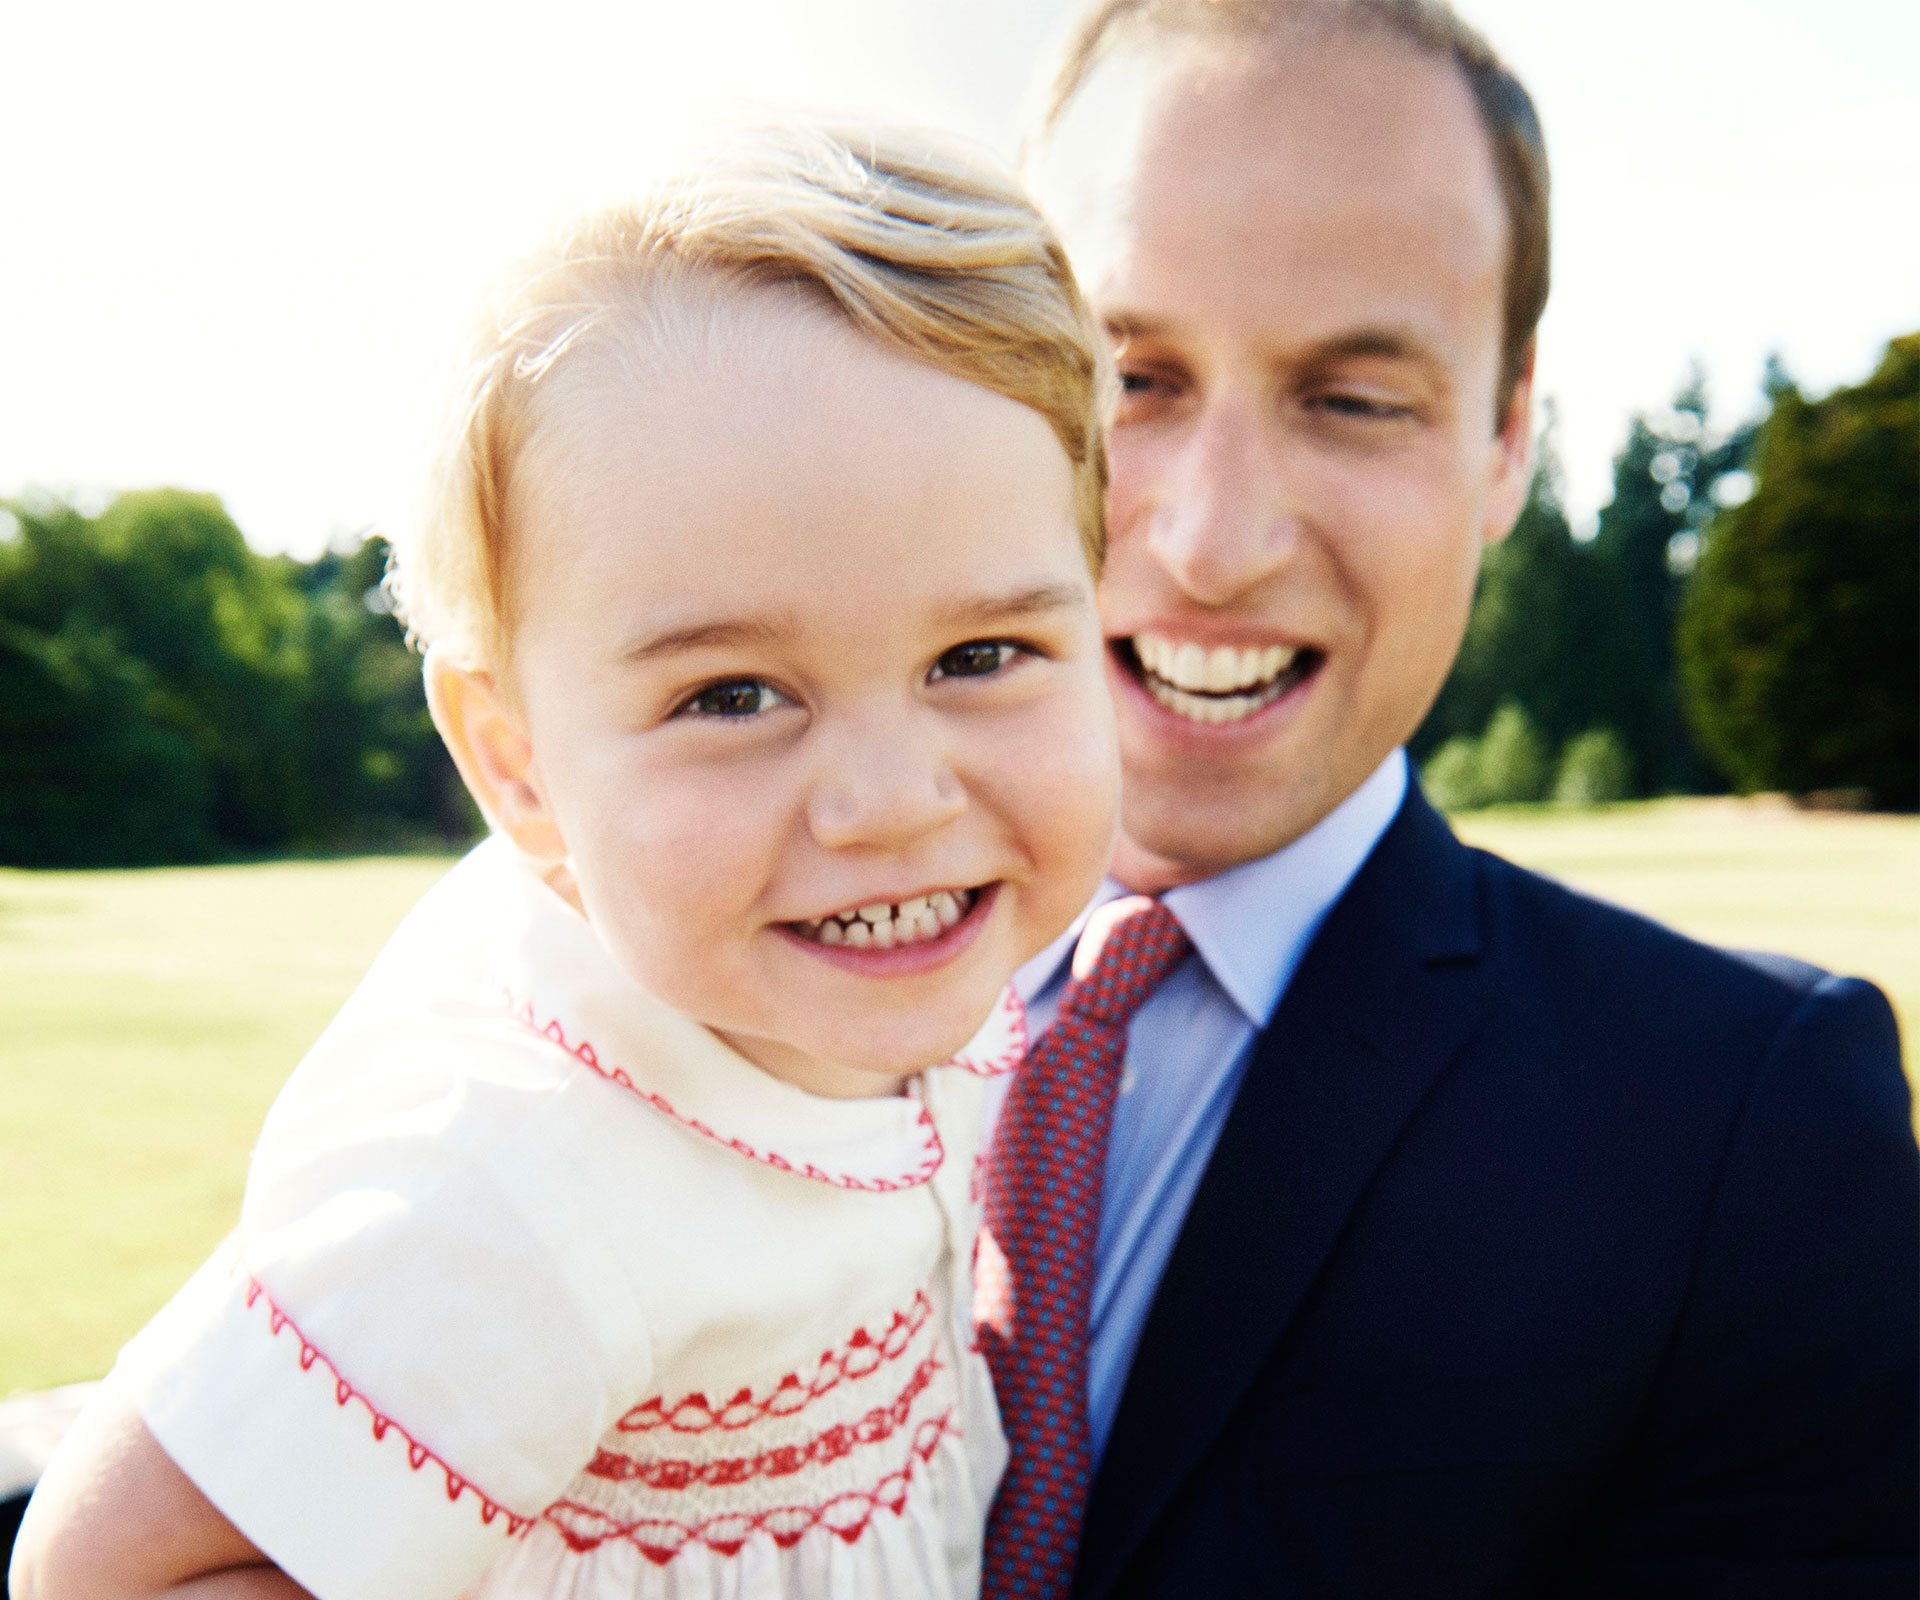 Prince William reveals Christmas plans